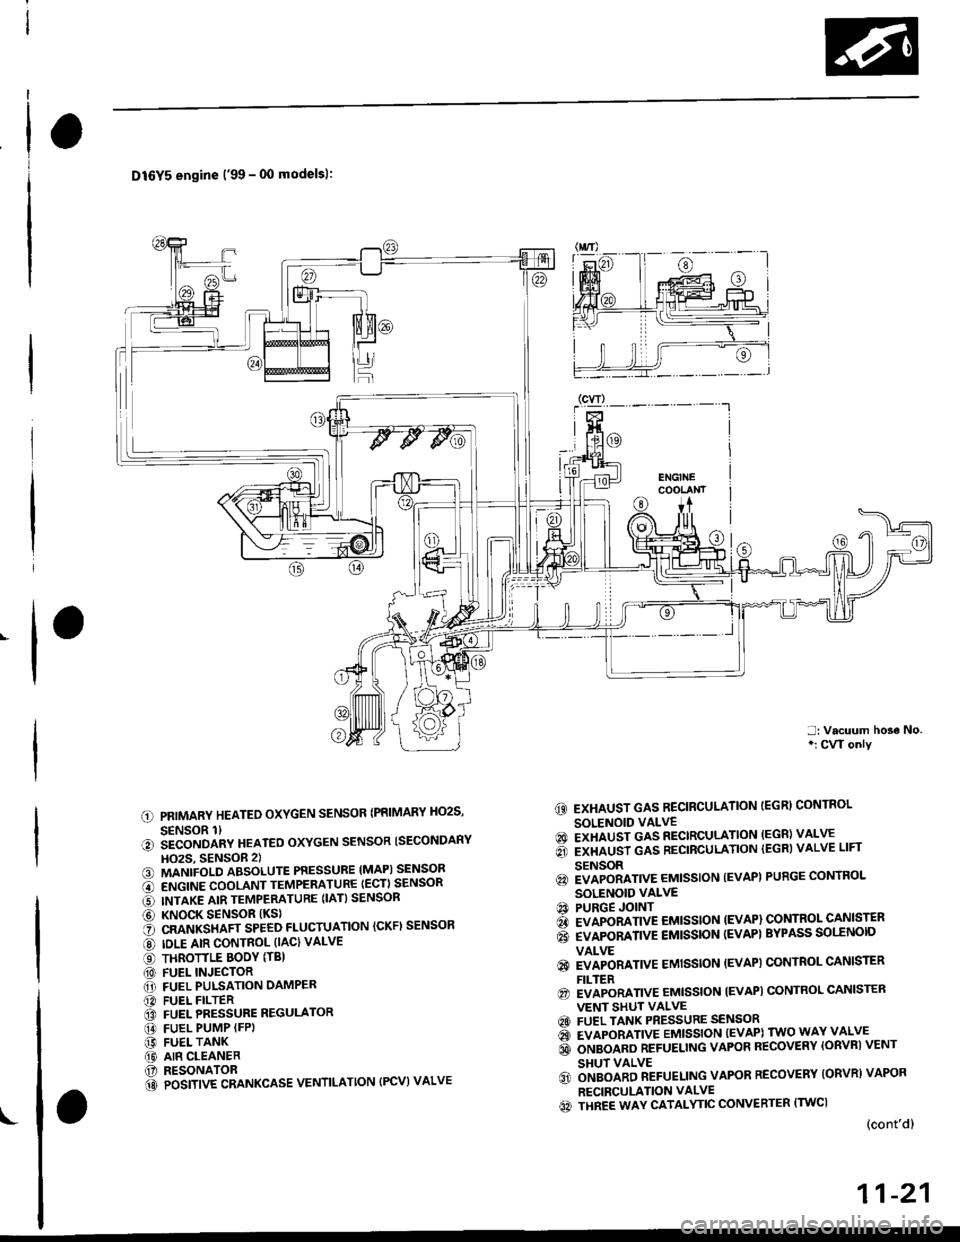 HONDA CIVIC 1998 6.G Workshop Manual D16Y5 engine (99 - 00 modelsl:
O) PRIMARY HEATED OXYGEN SENSOR (PBIMARY HO2S,
SENSOR 1)
O SECONDARY HEATEO OXYGEN SENSOR {SECONDARY
HO2S. SENSOR 2)
6] MANIFOLD ABSOLUTE PRESSURE IMAPI SENSOR
rO CruCI